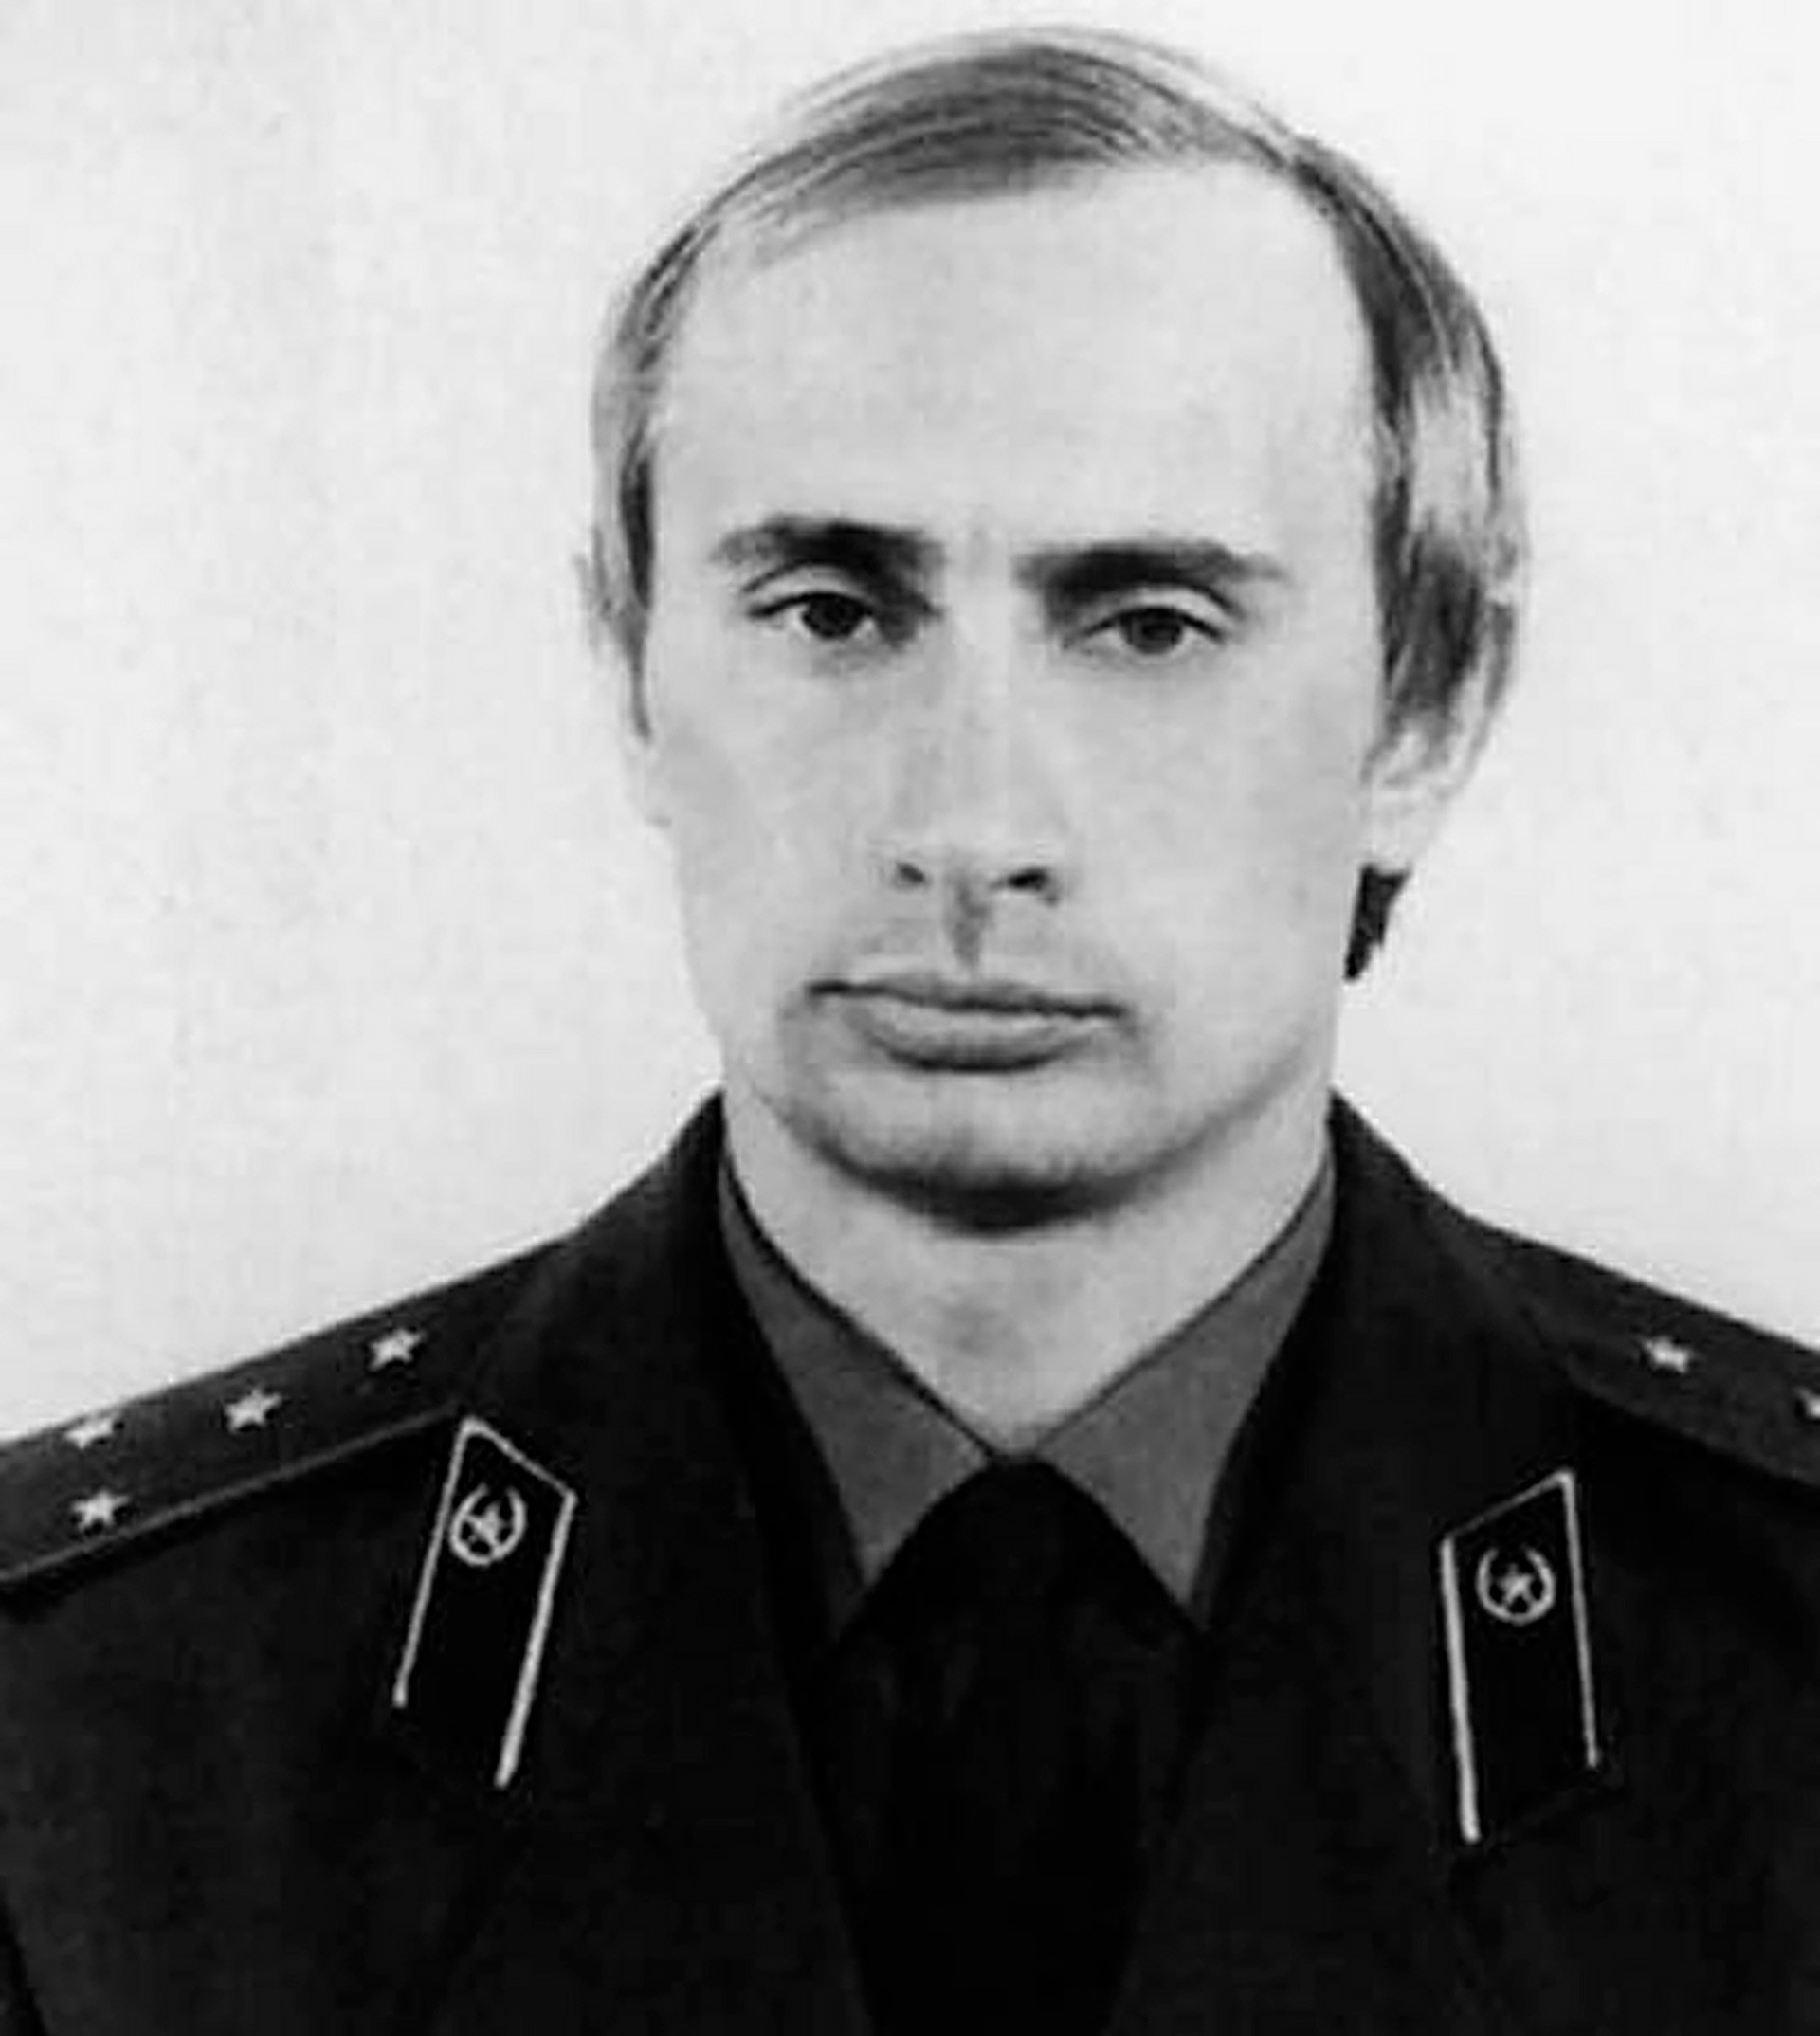 Putin in KGB uniform, circa 1980